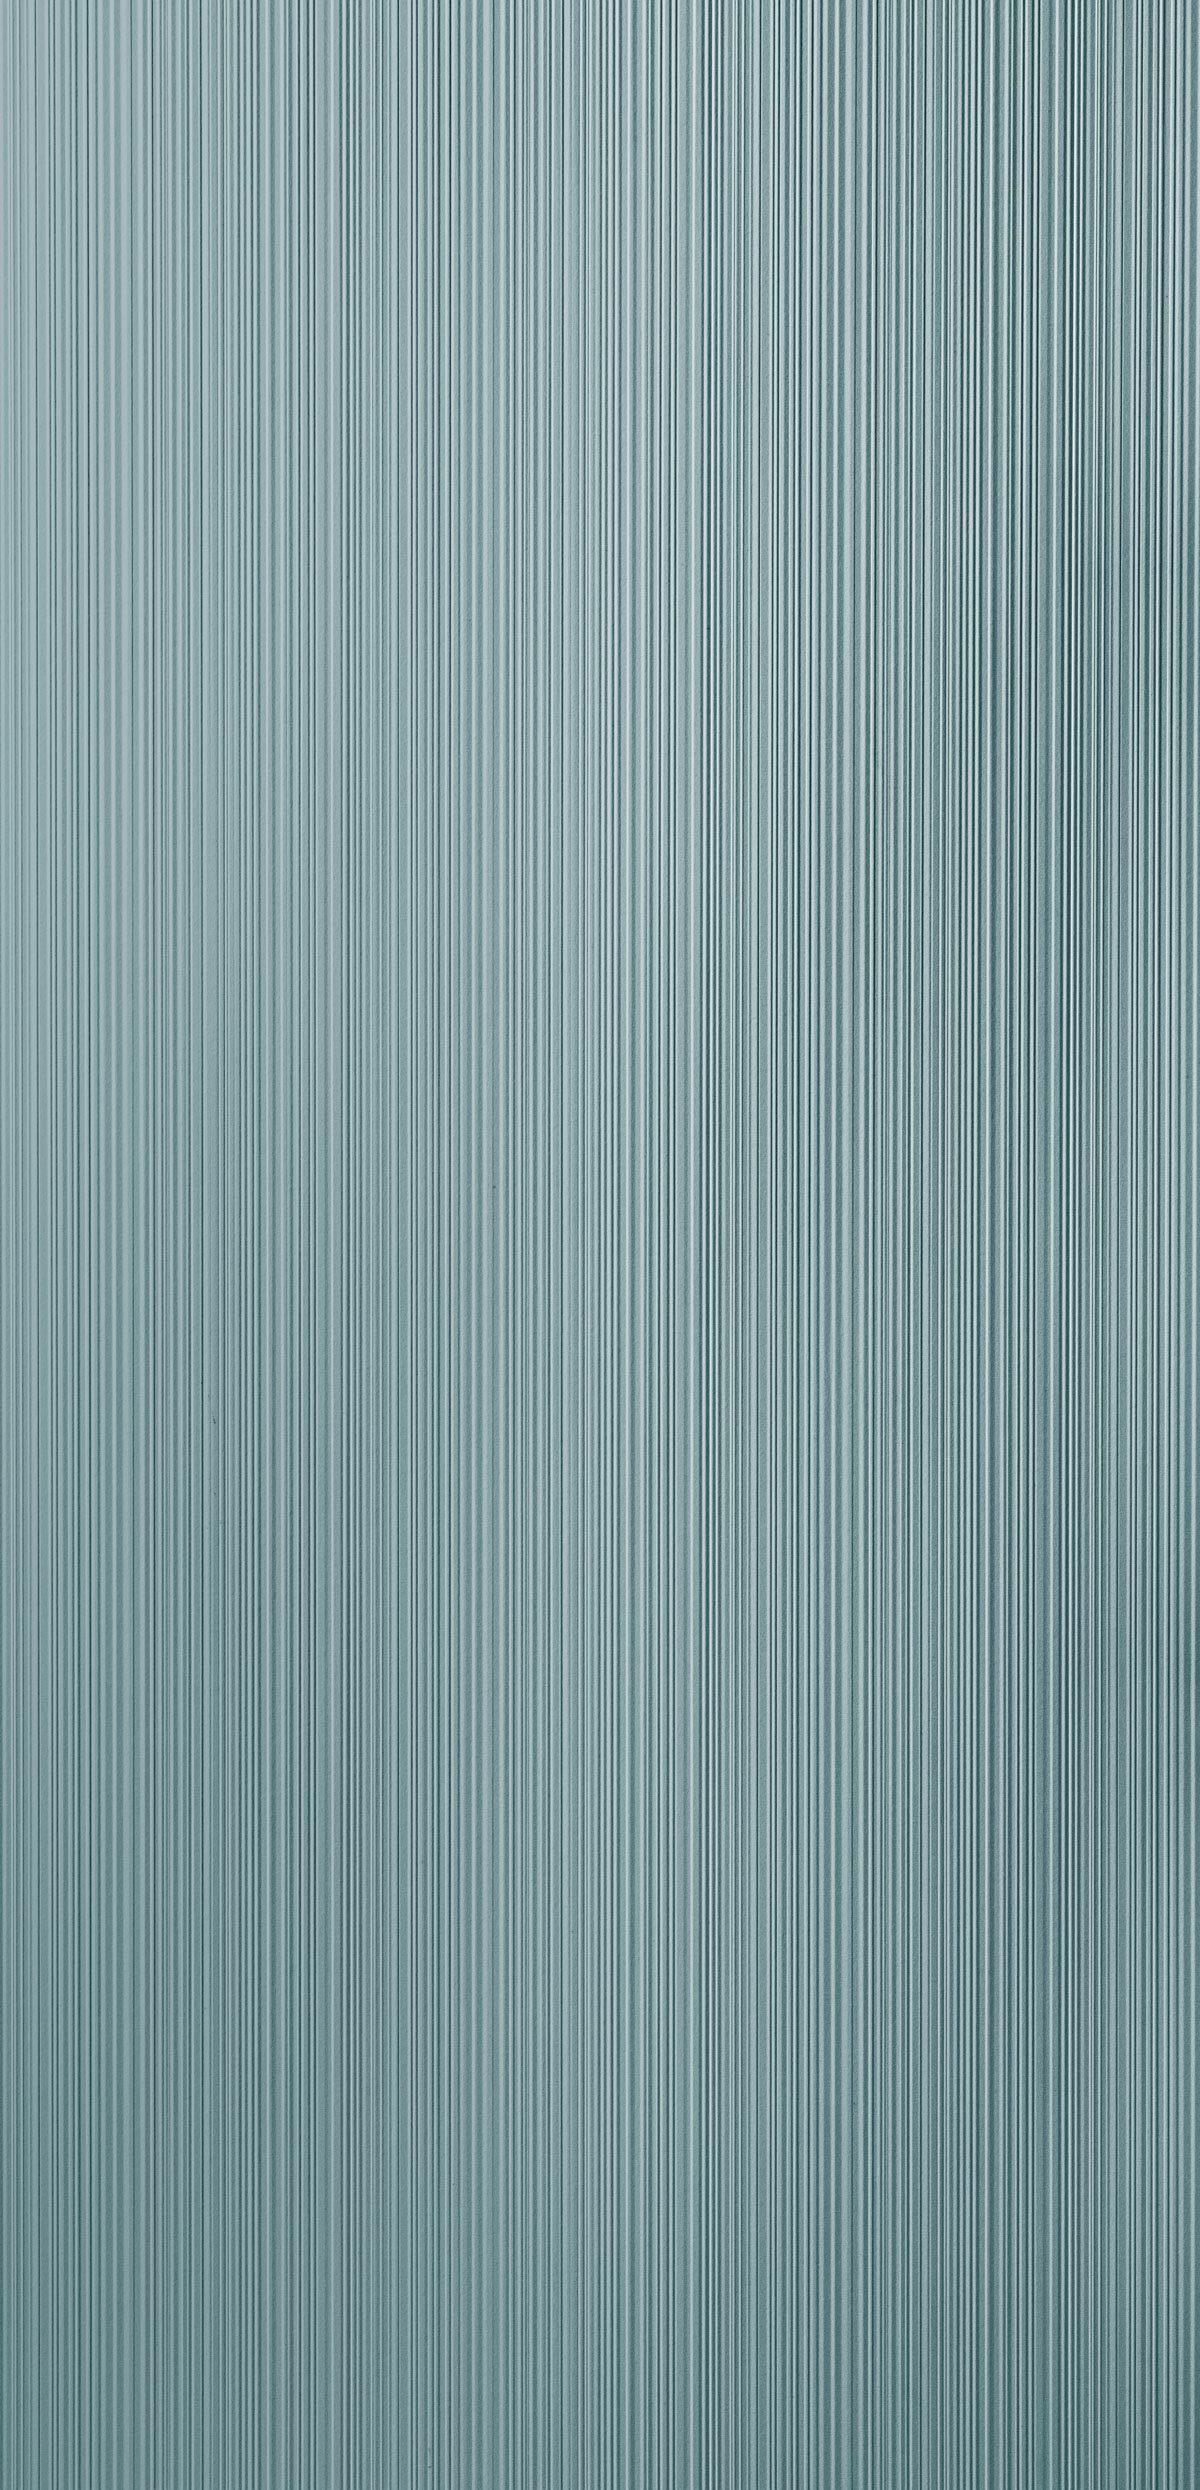 Lines Azure 016-panel